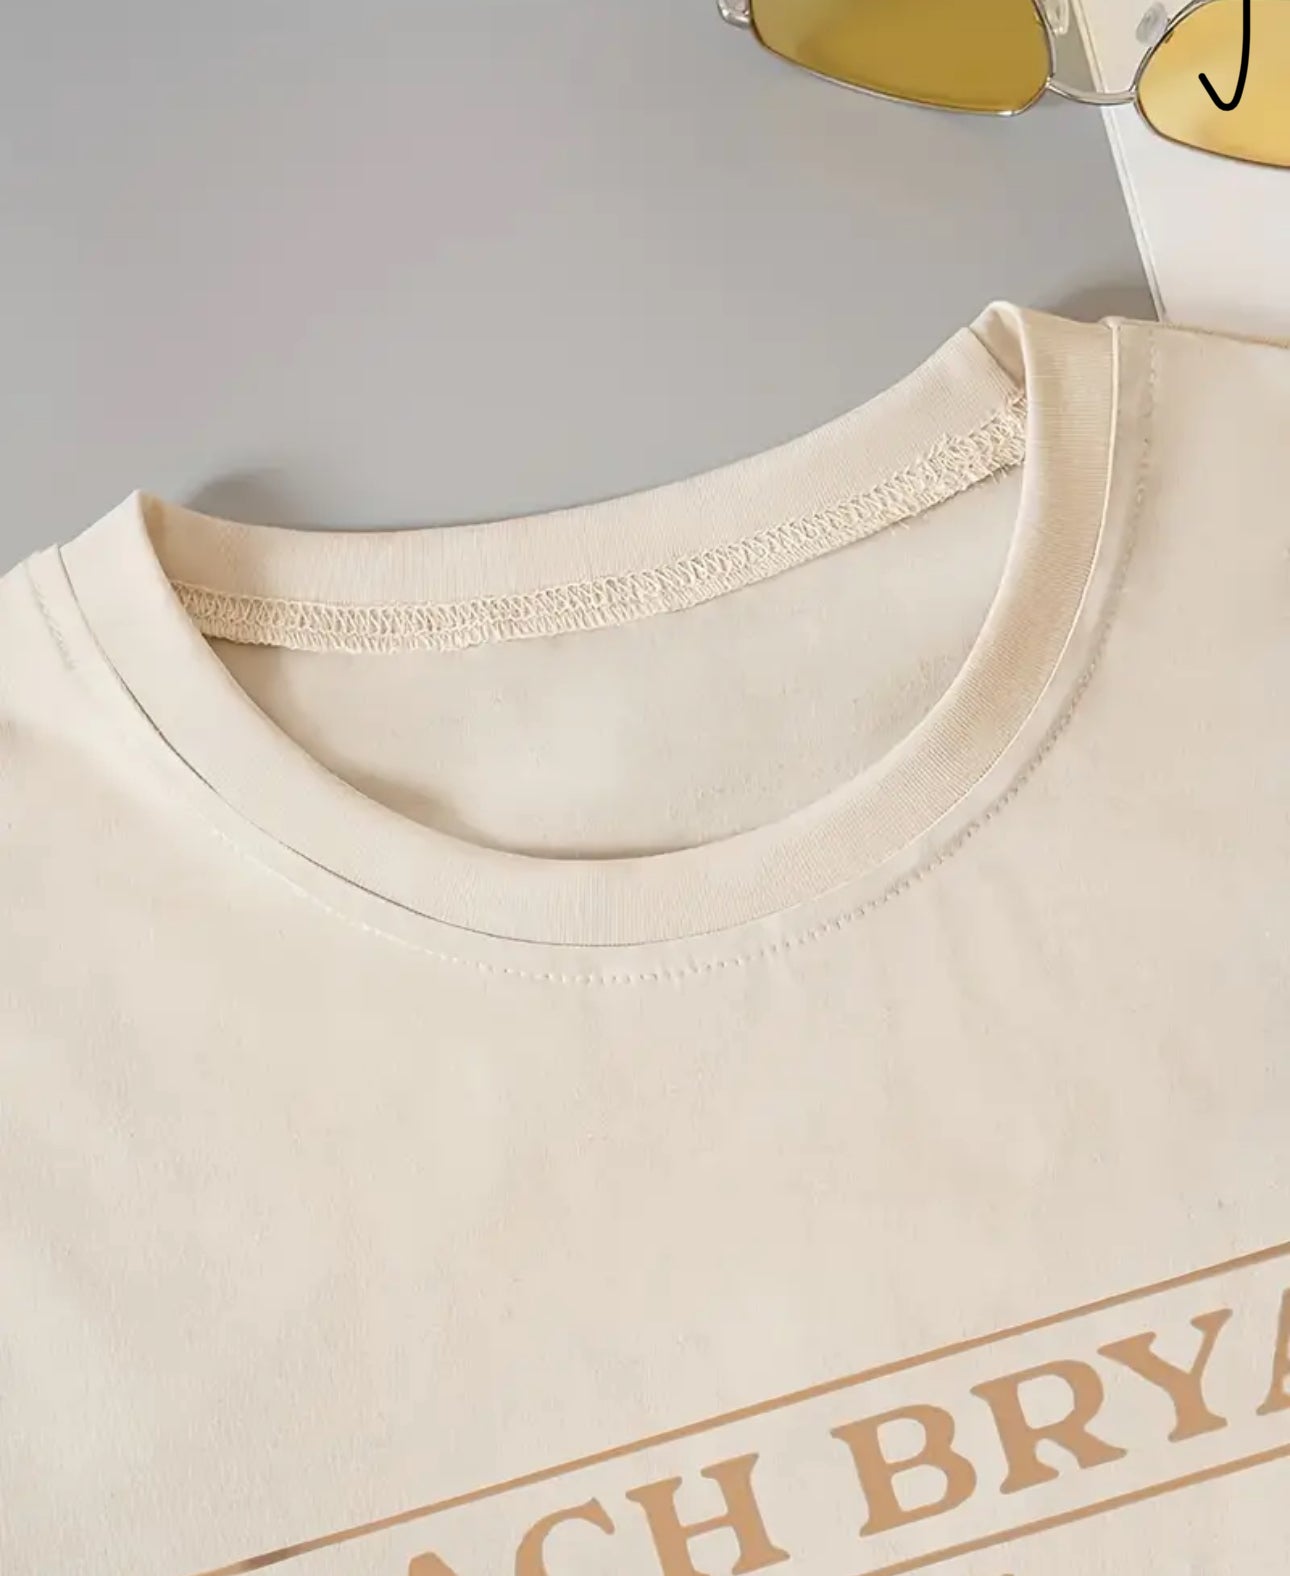 Zach Bryan Horse Riding & Letter Print T-Shirt Cream Graphic T-Shirt